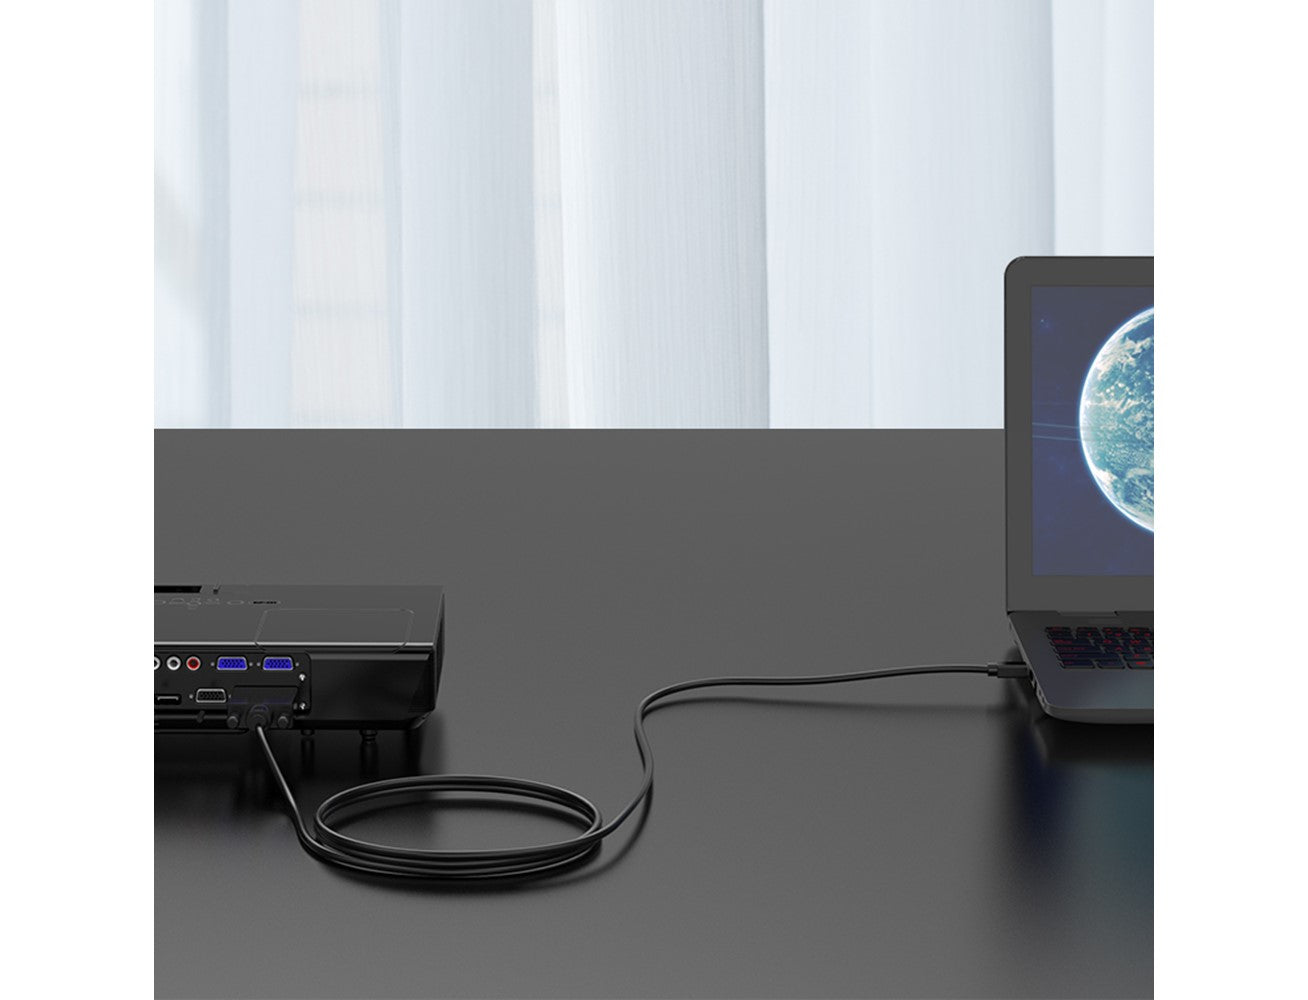 ORICO Mini DisplayPort to DVI Cable - 1 Meter / Black